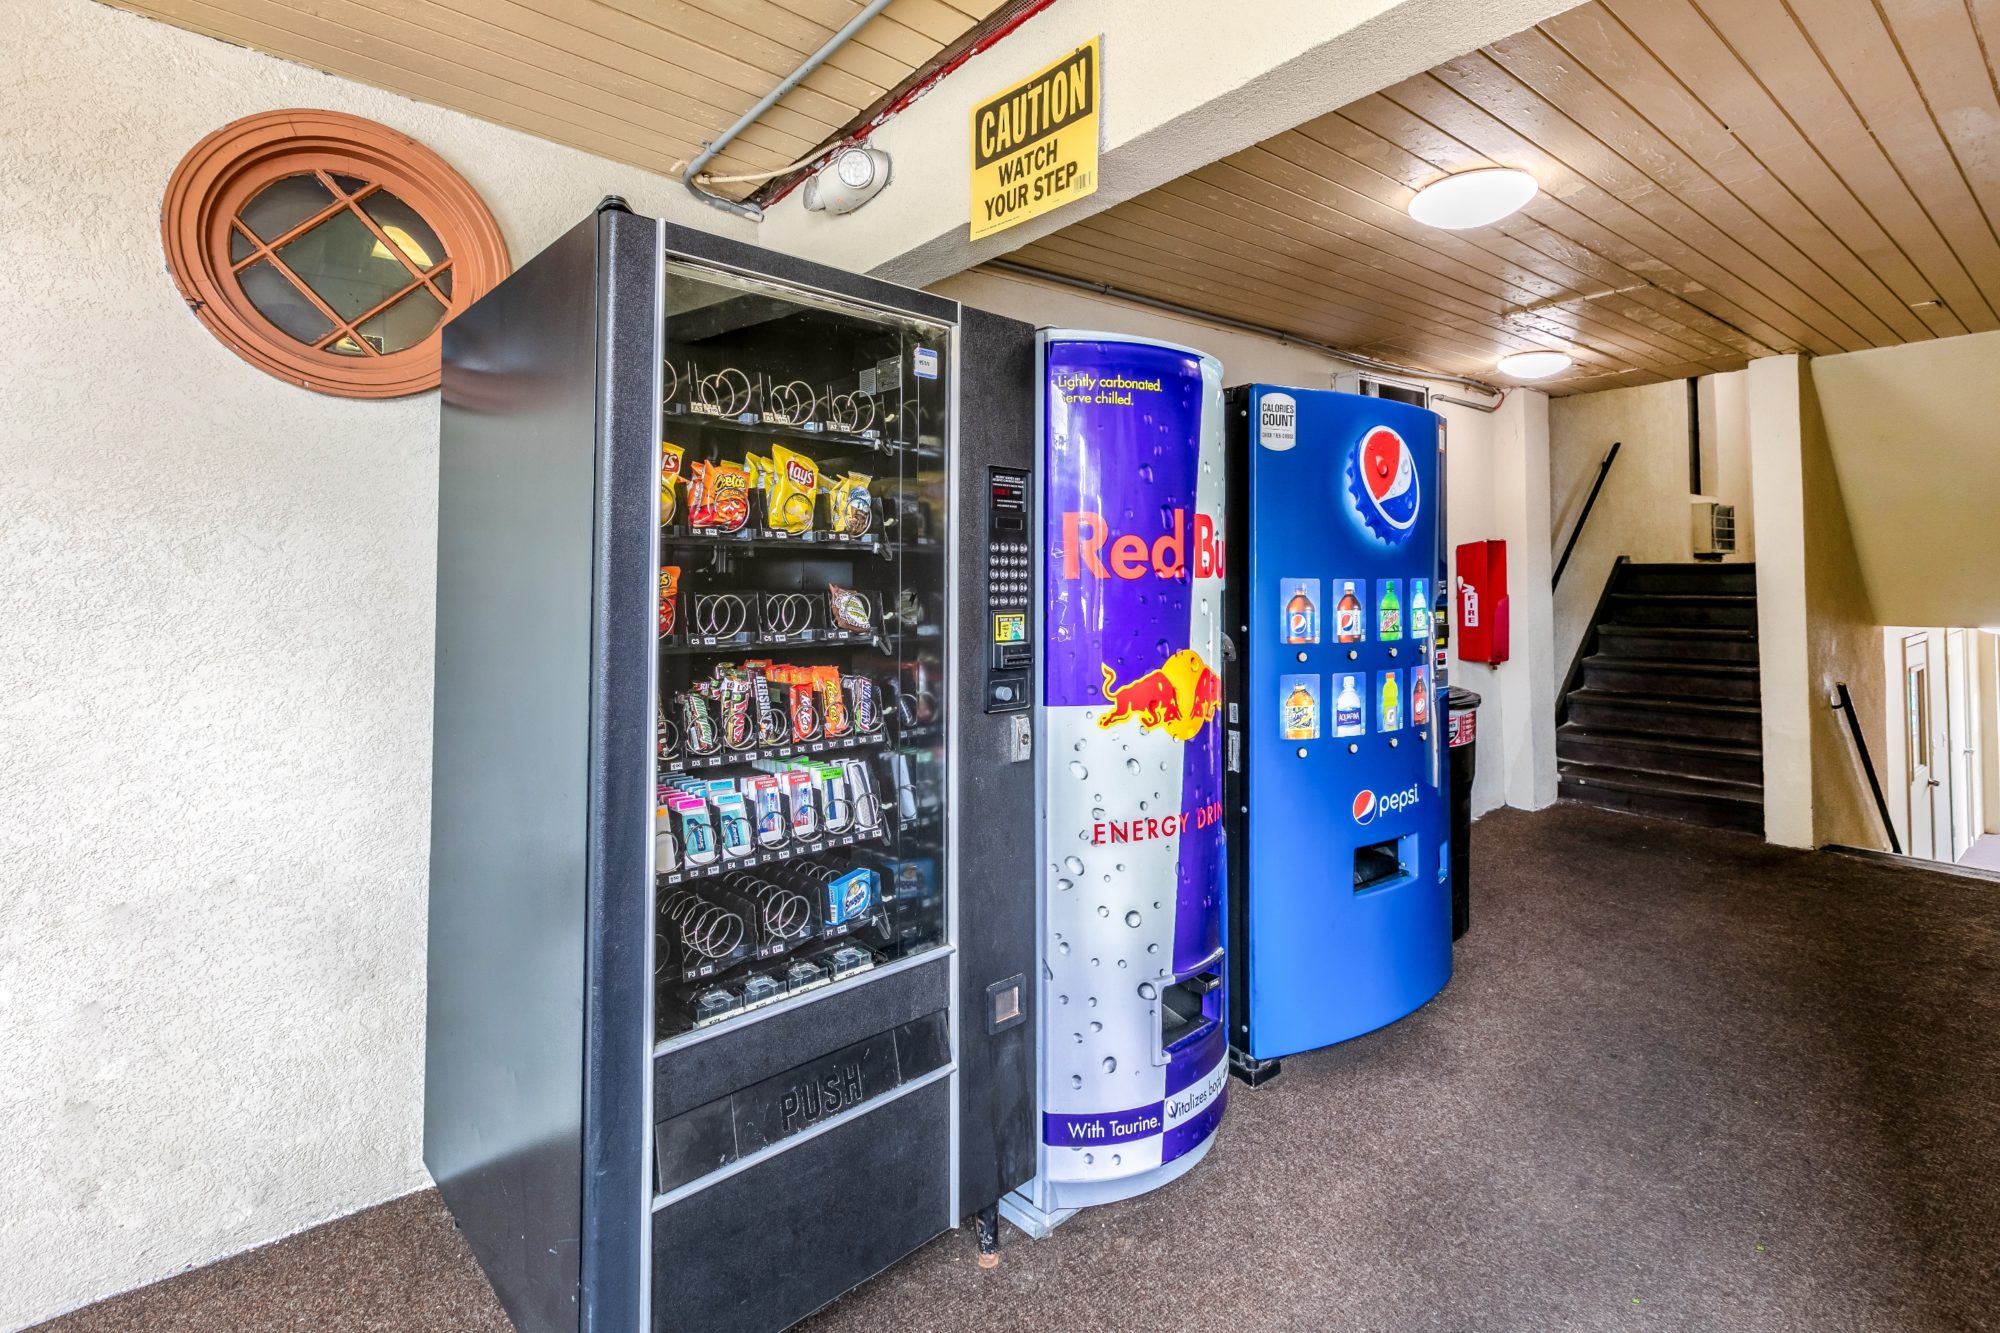 Snack and drink vending machines, carpet flooring